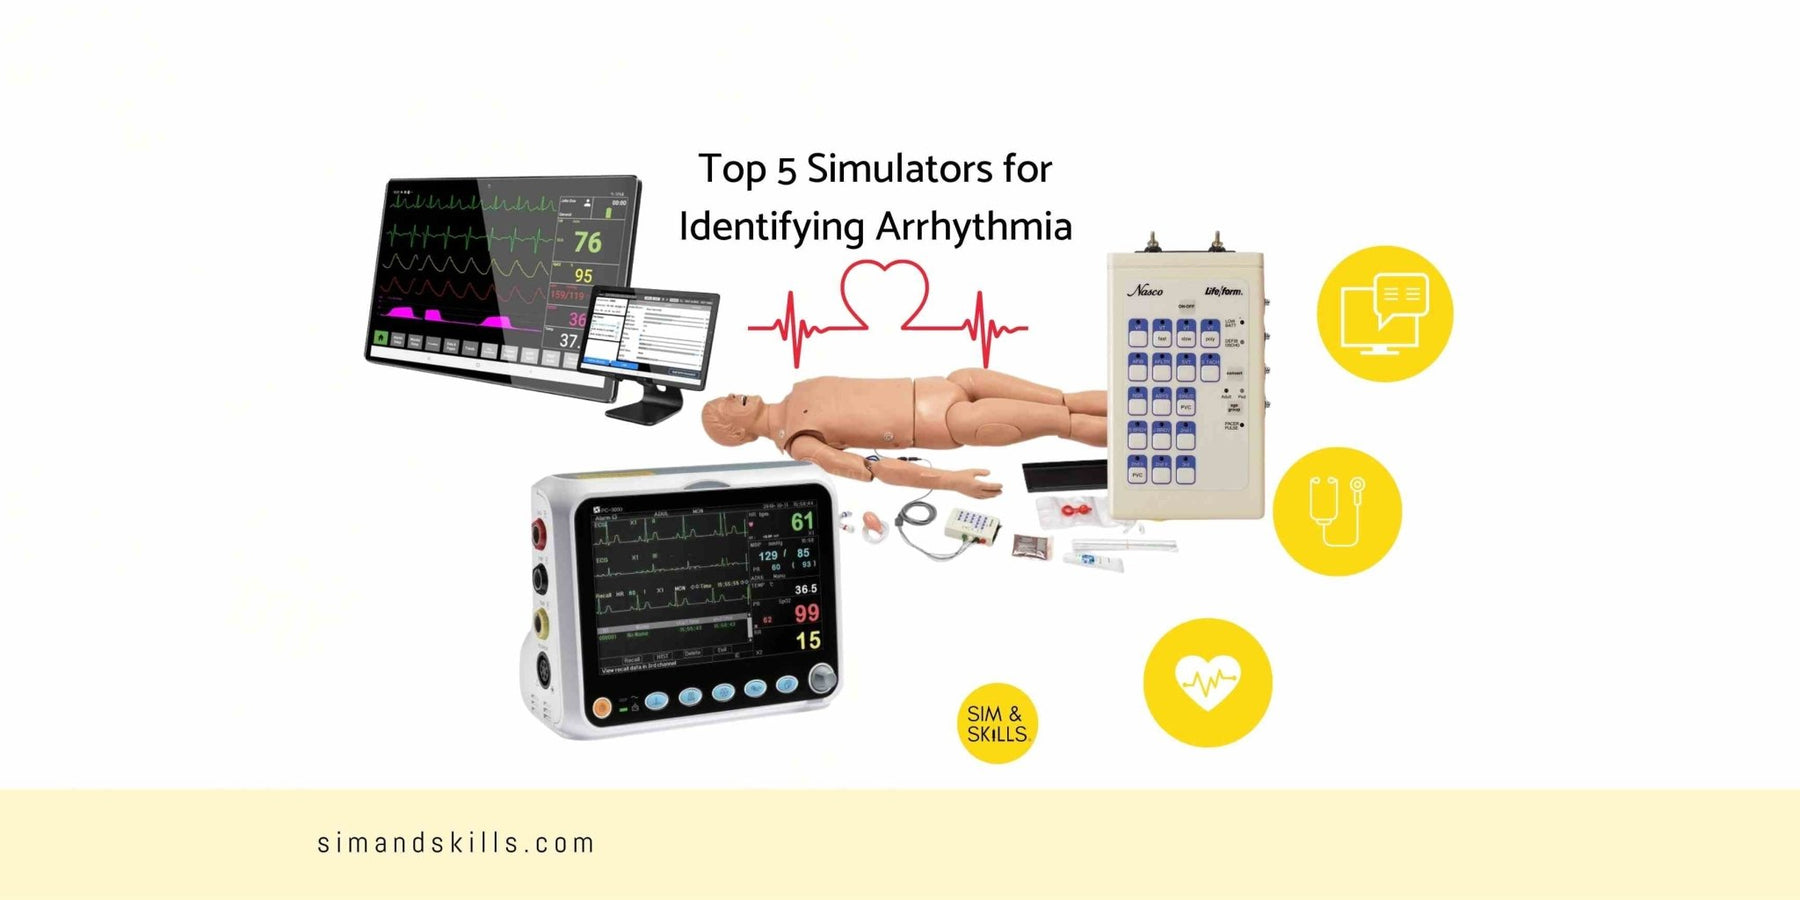 Our Top 5 Simulators for Identifying Arrhythmia - Sim & Skills